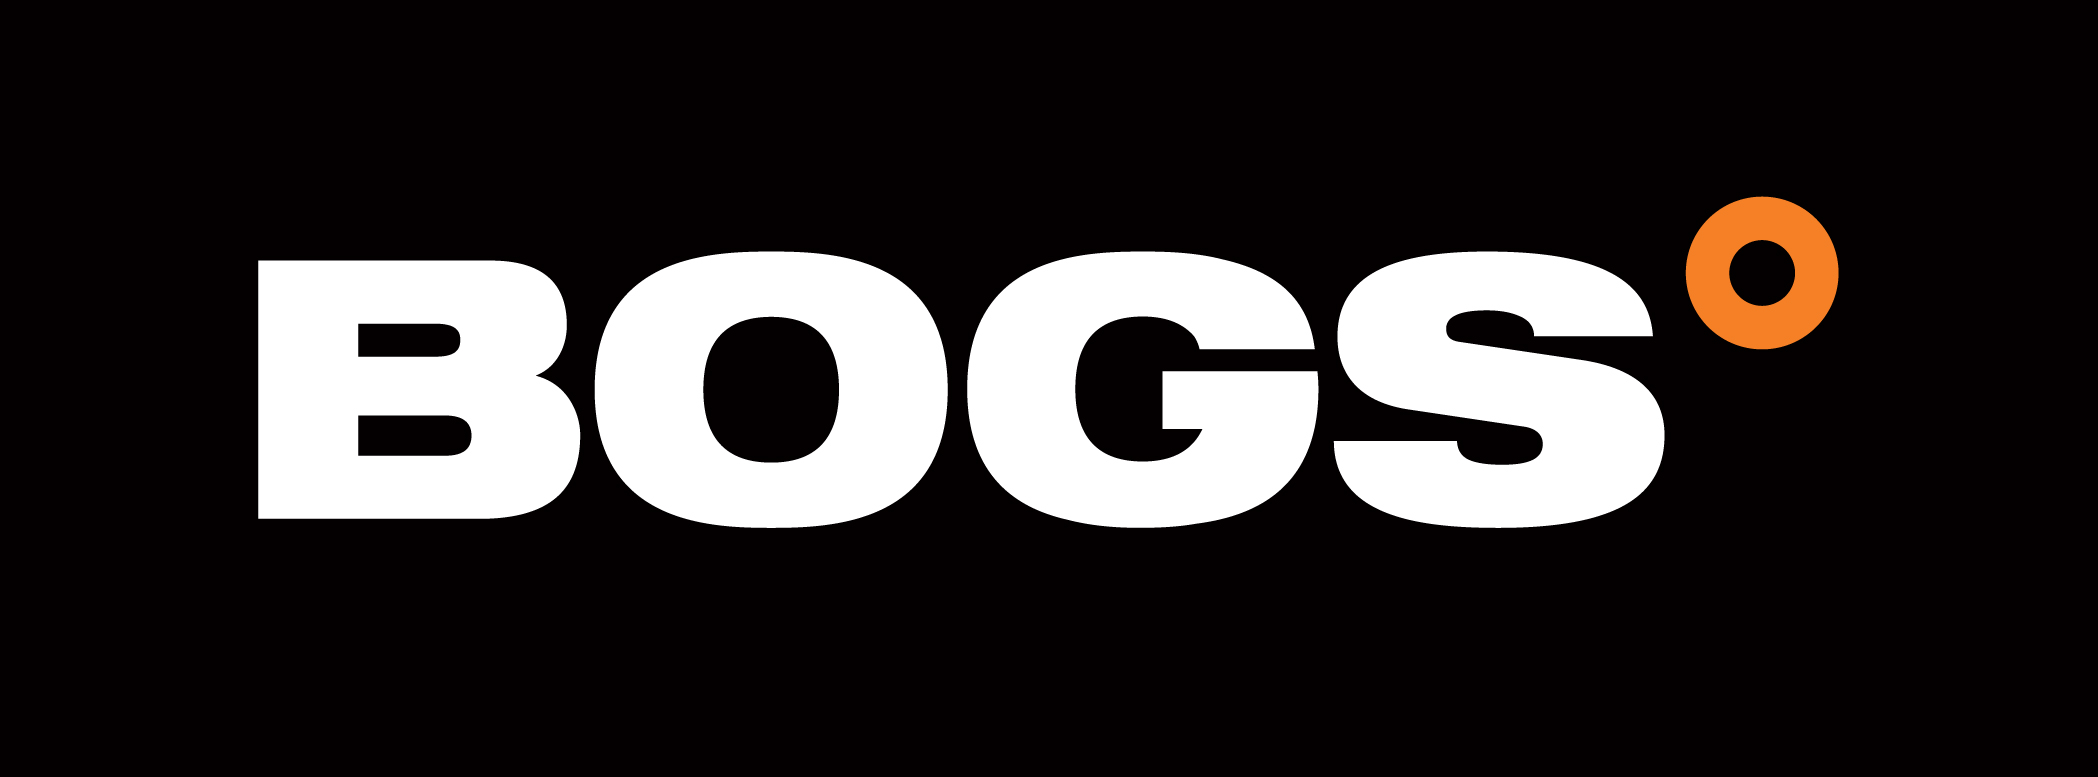 Bogs-logoBOX-KO